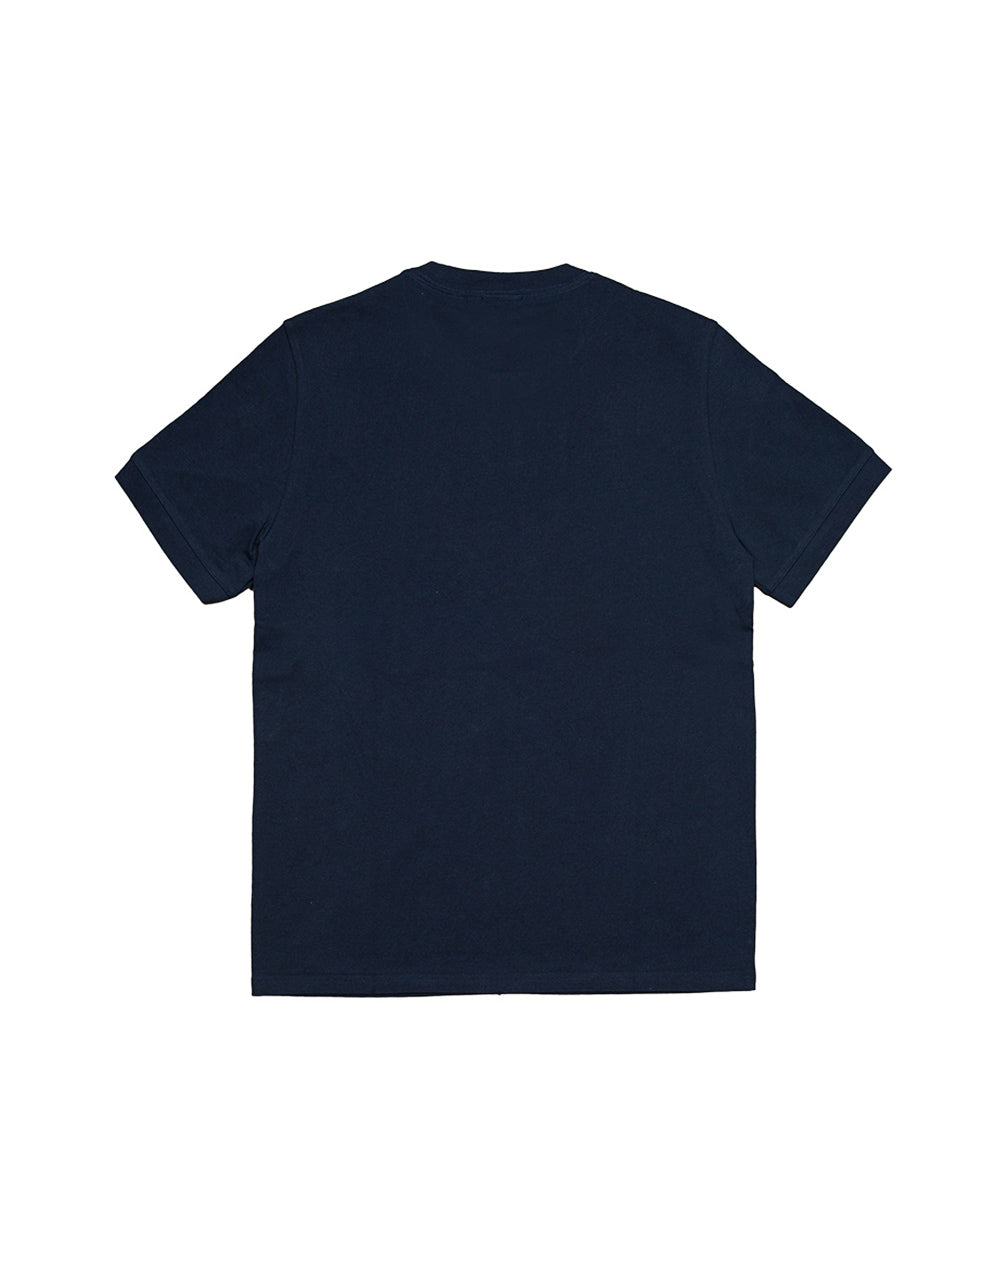 ACANTHUS x muta MARINE CAPTAIN Tシャツ [全3色] – muta Online Store